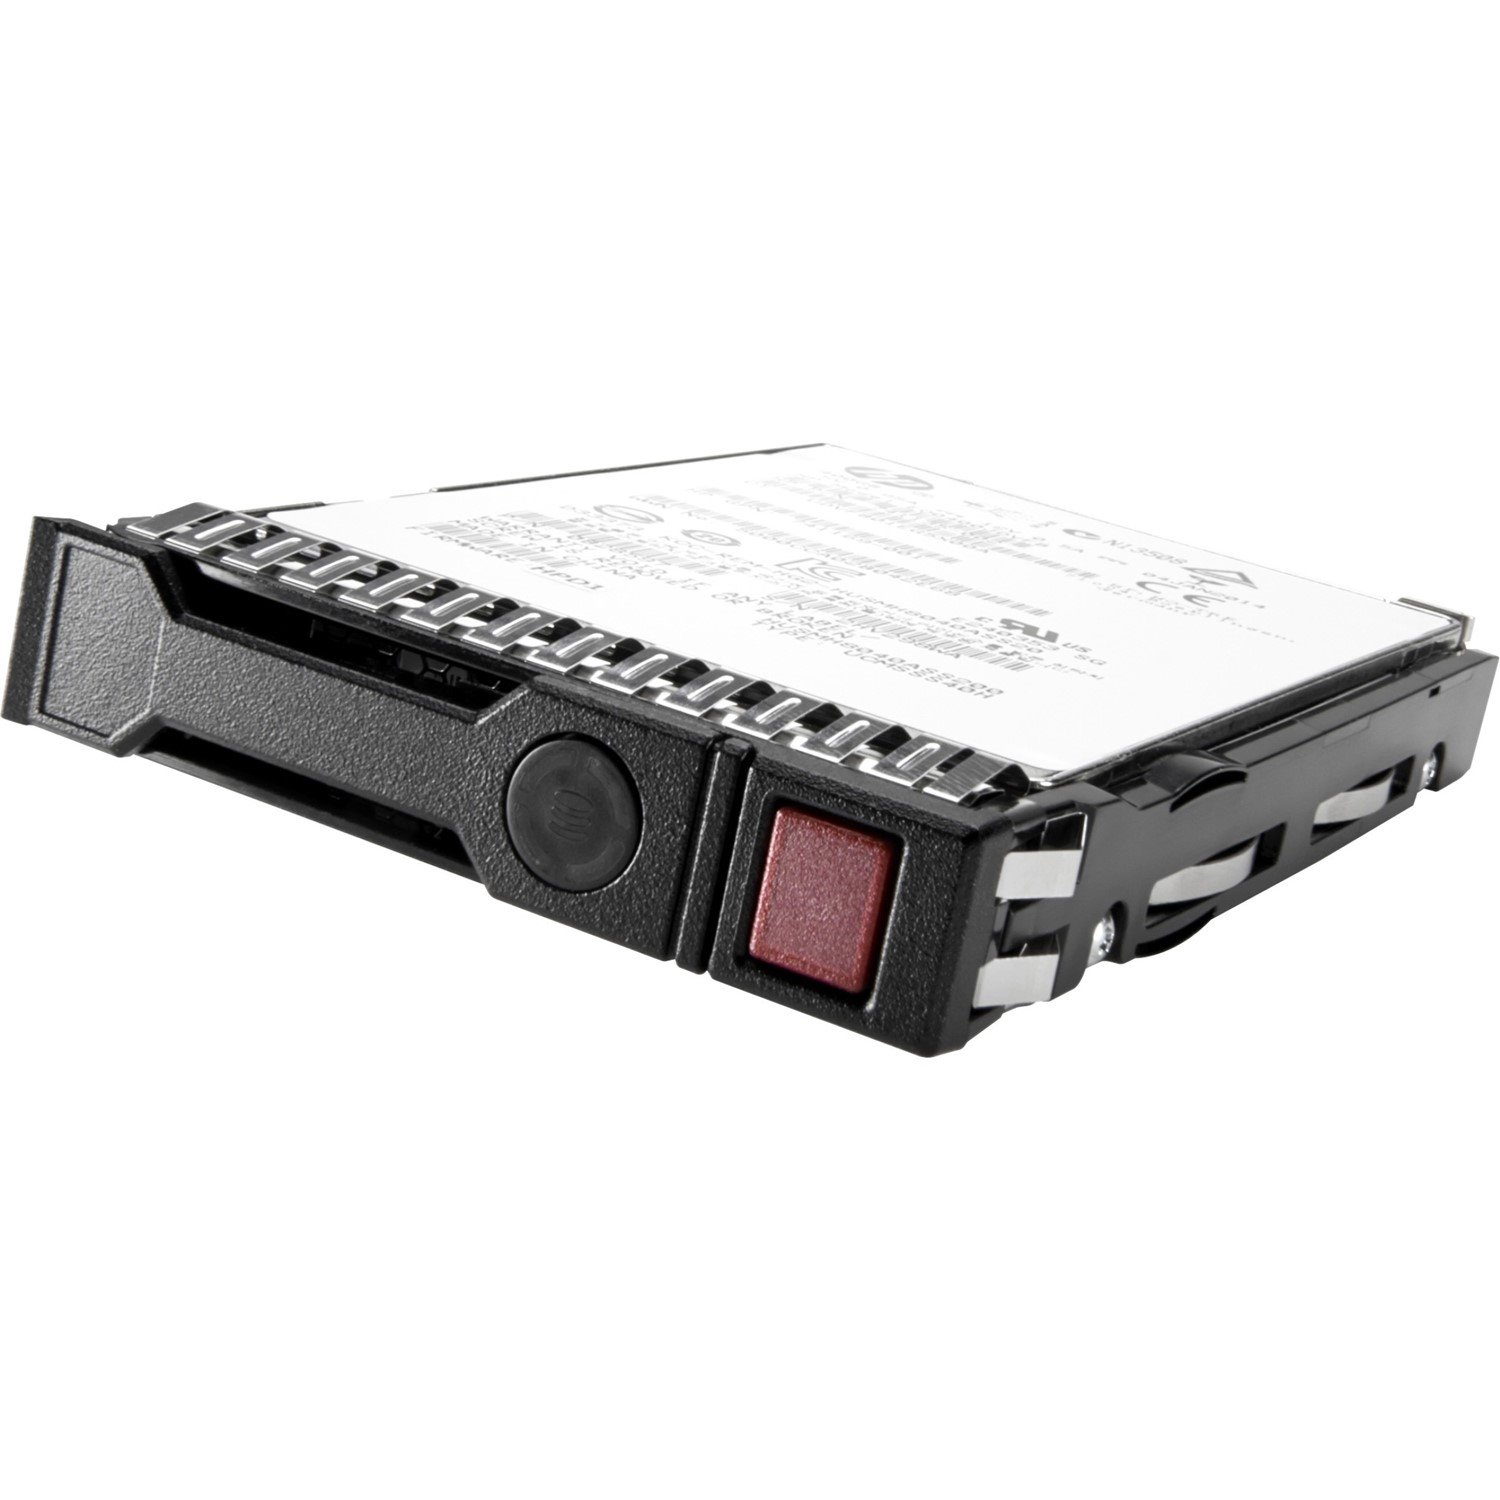 HPE 600 GB 2.5" Internal Hard Drive - SAS